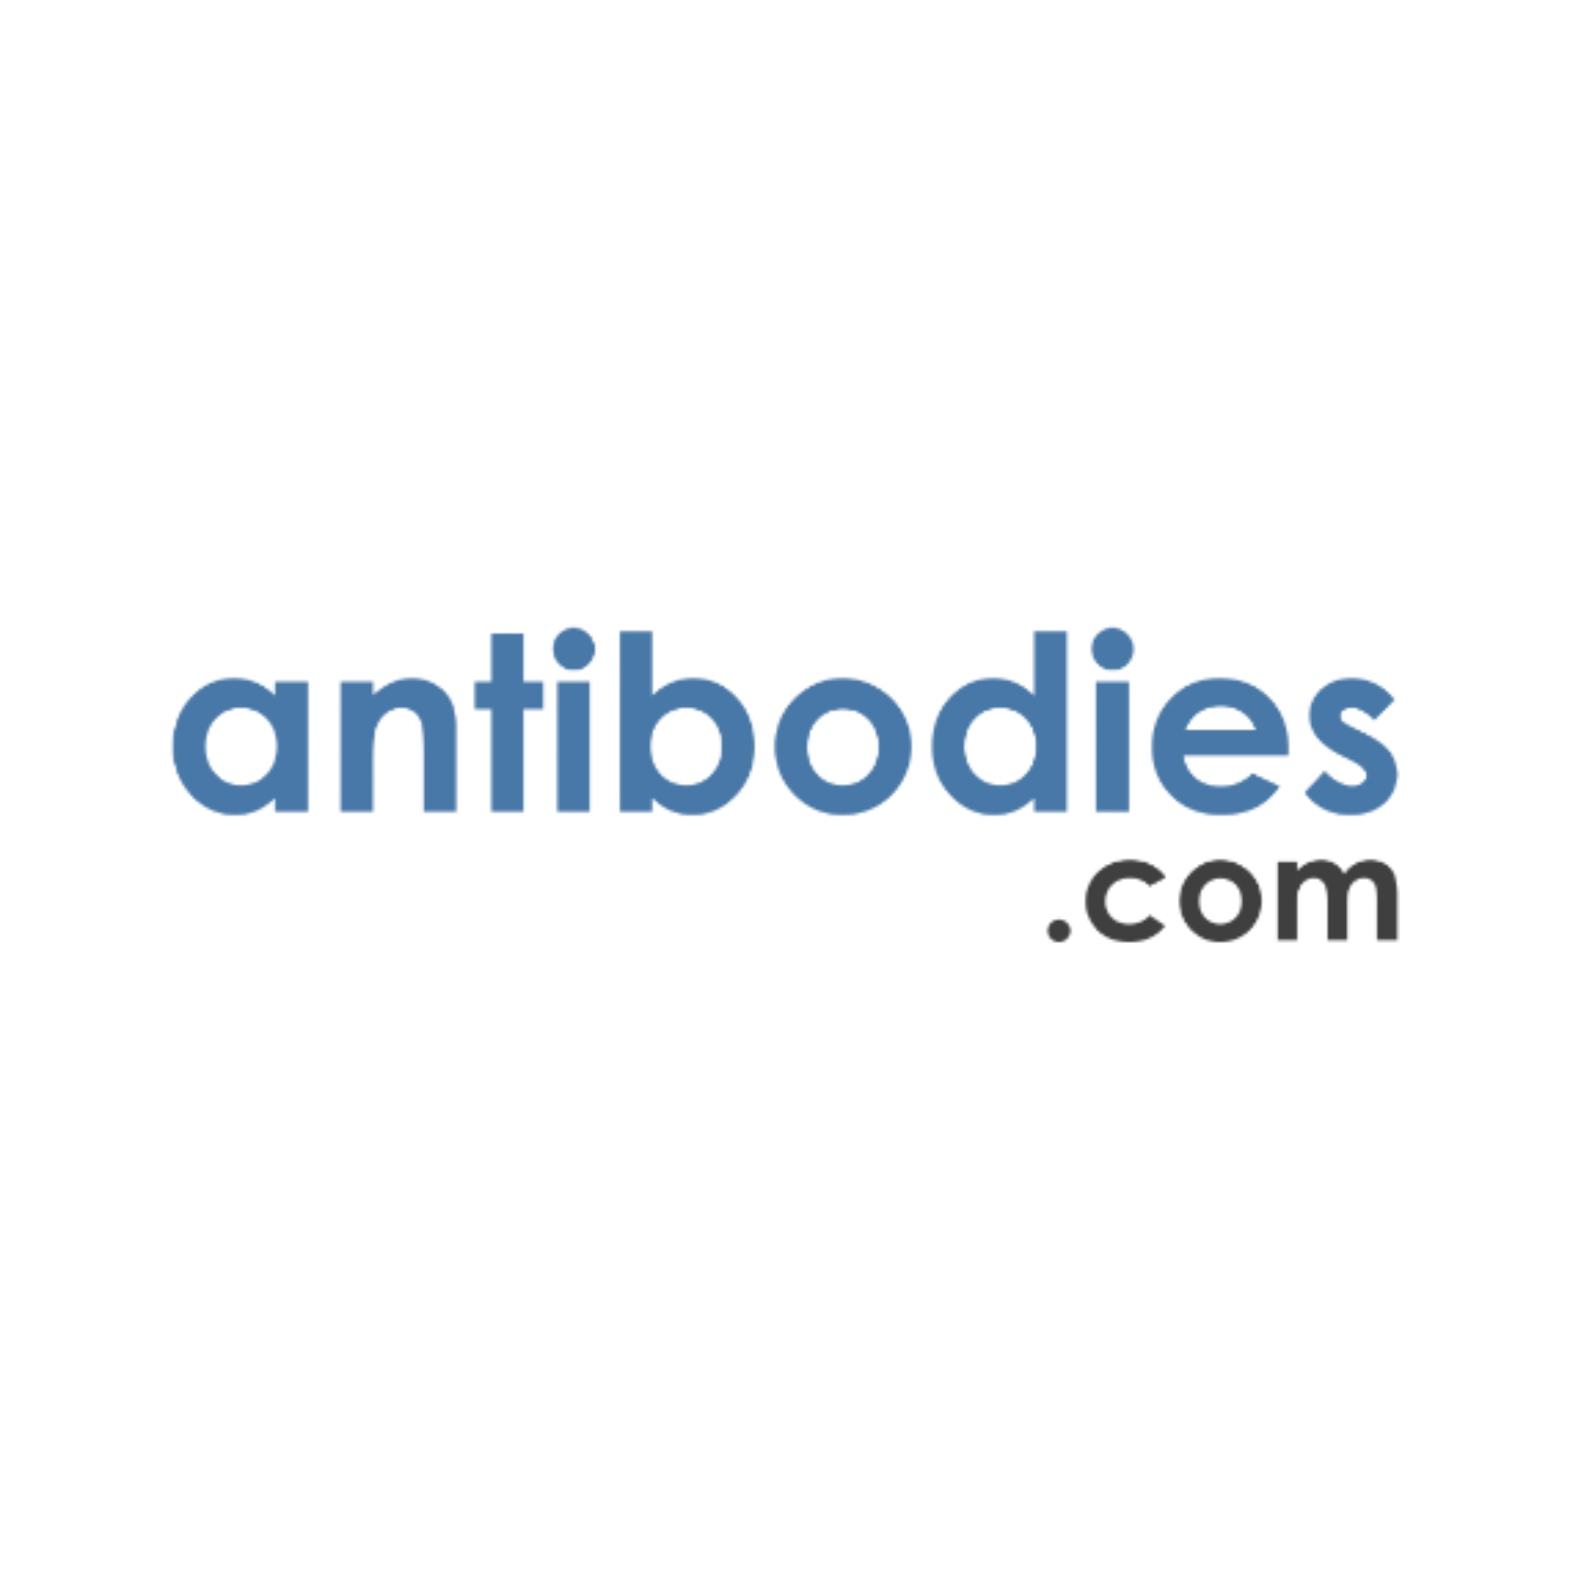 images/AFMS/Partners/Antibodies-com.jpg#joomlaImage://local-images/AFMS/Partners/Antibodies-com.jpg?width=1570&height=1570